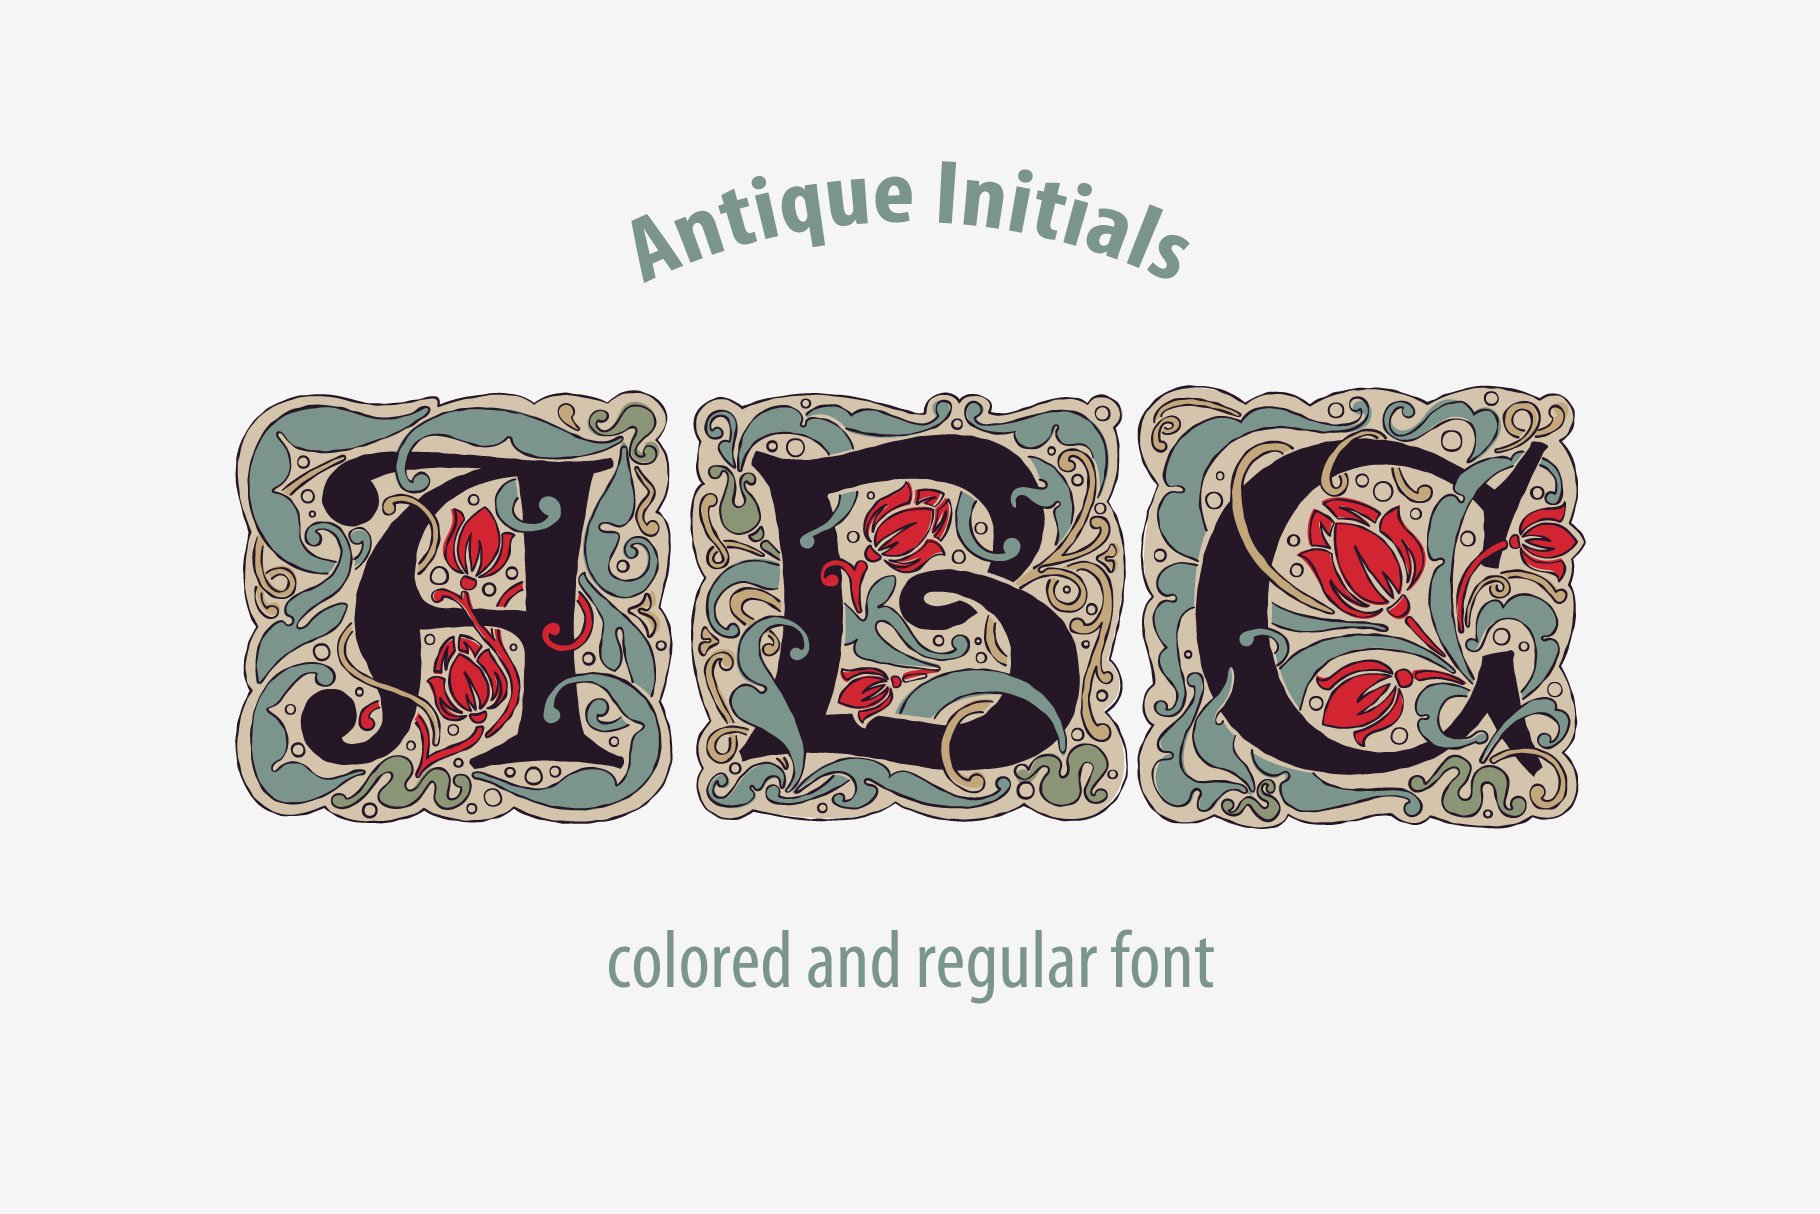 Antique Initials font cover image.